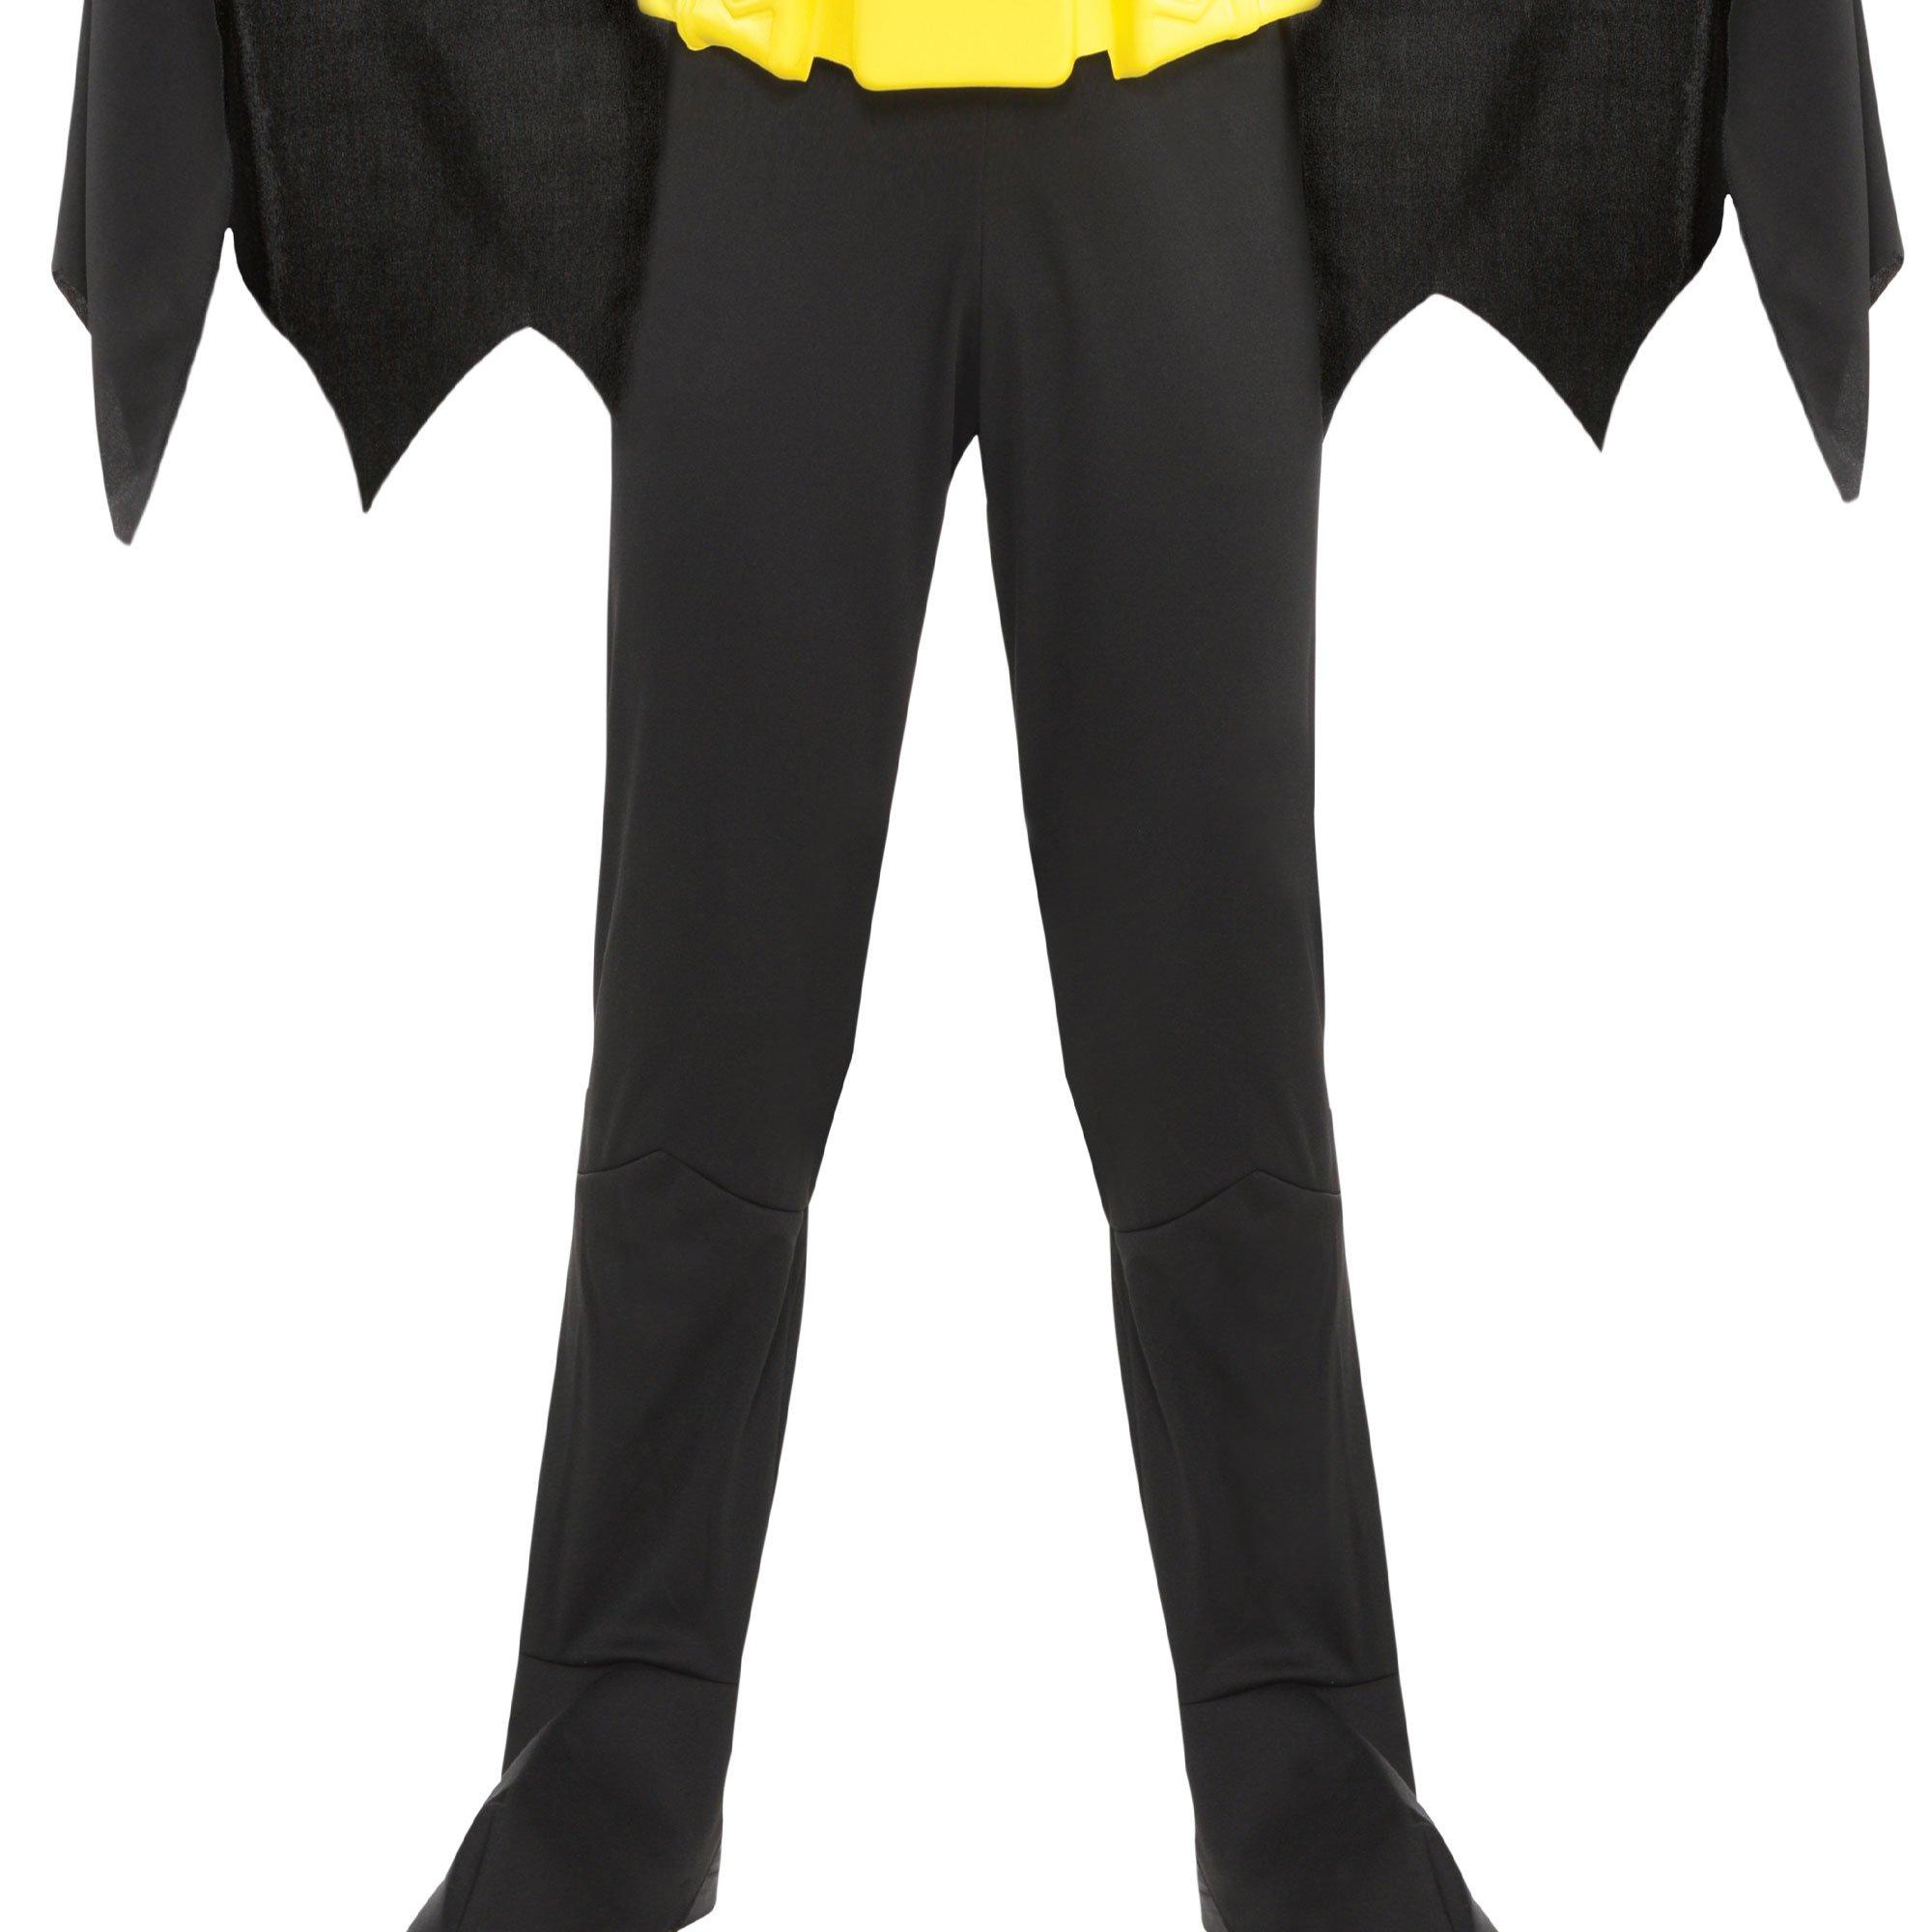 Boys Batman Costume